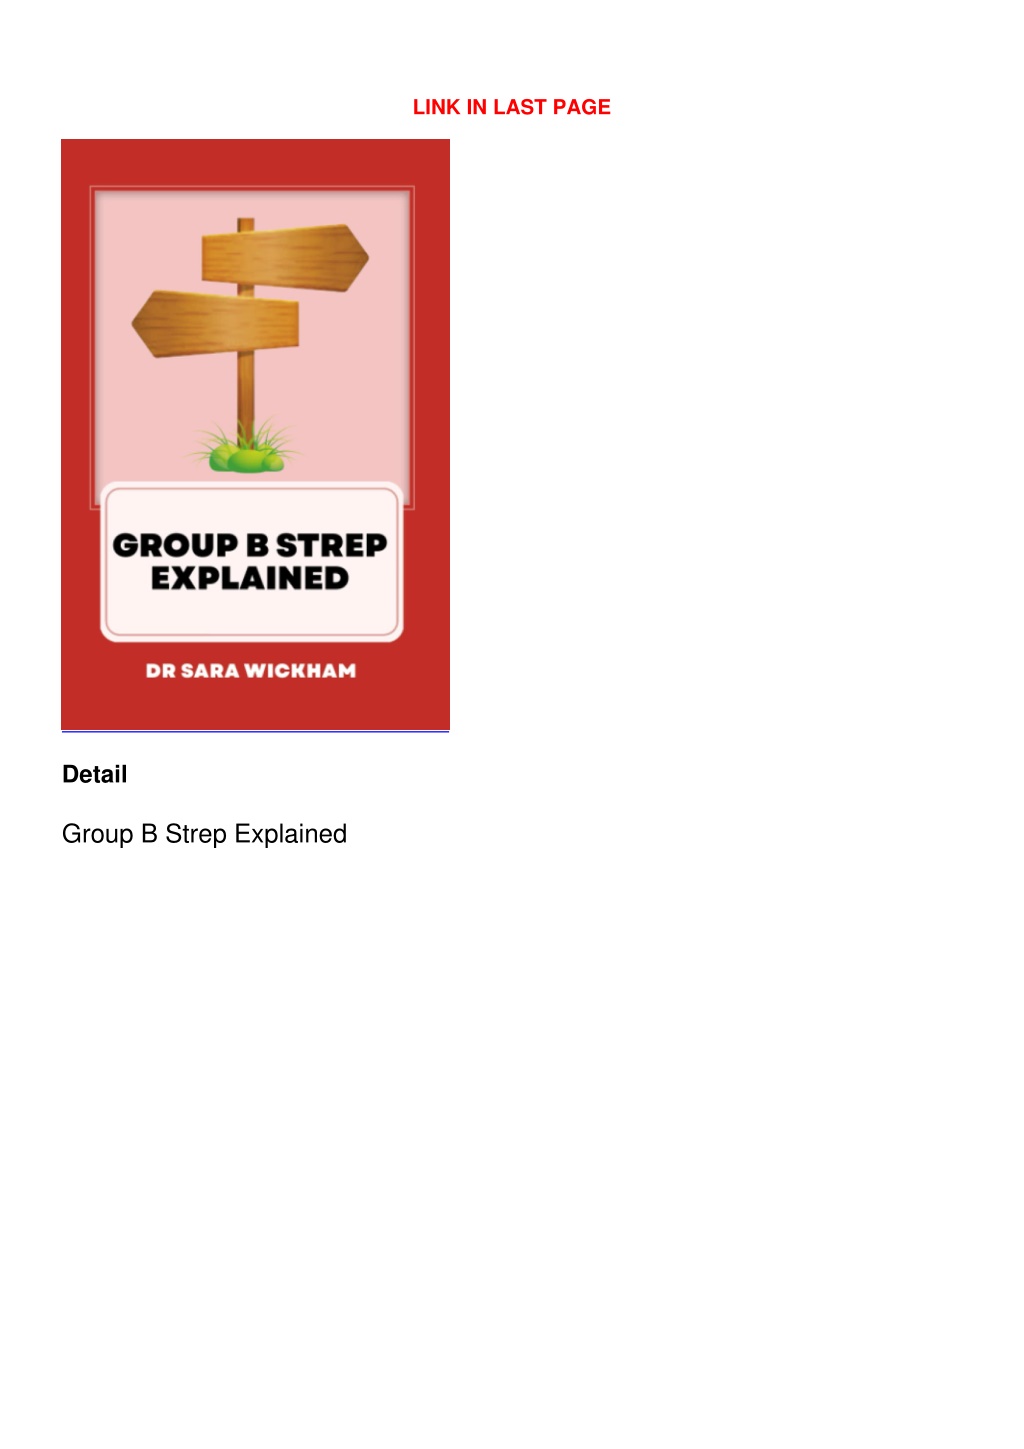 group b strep powerpoint presentation